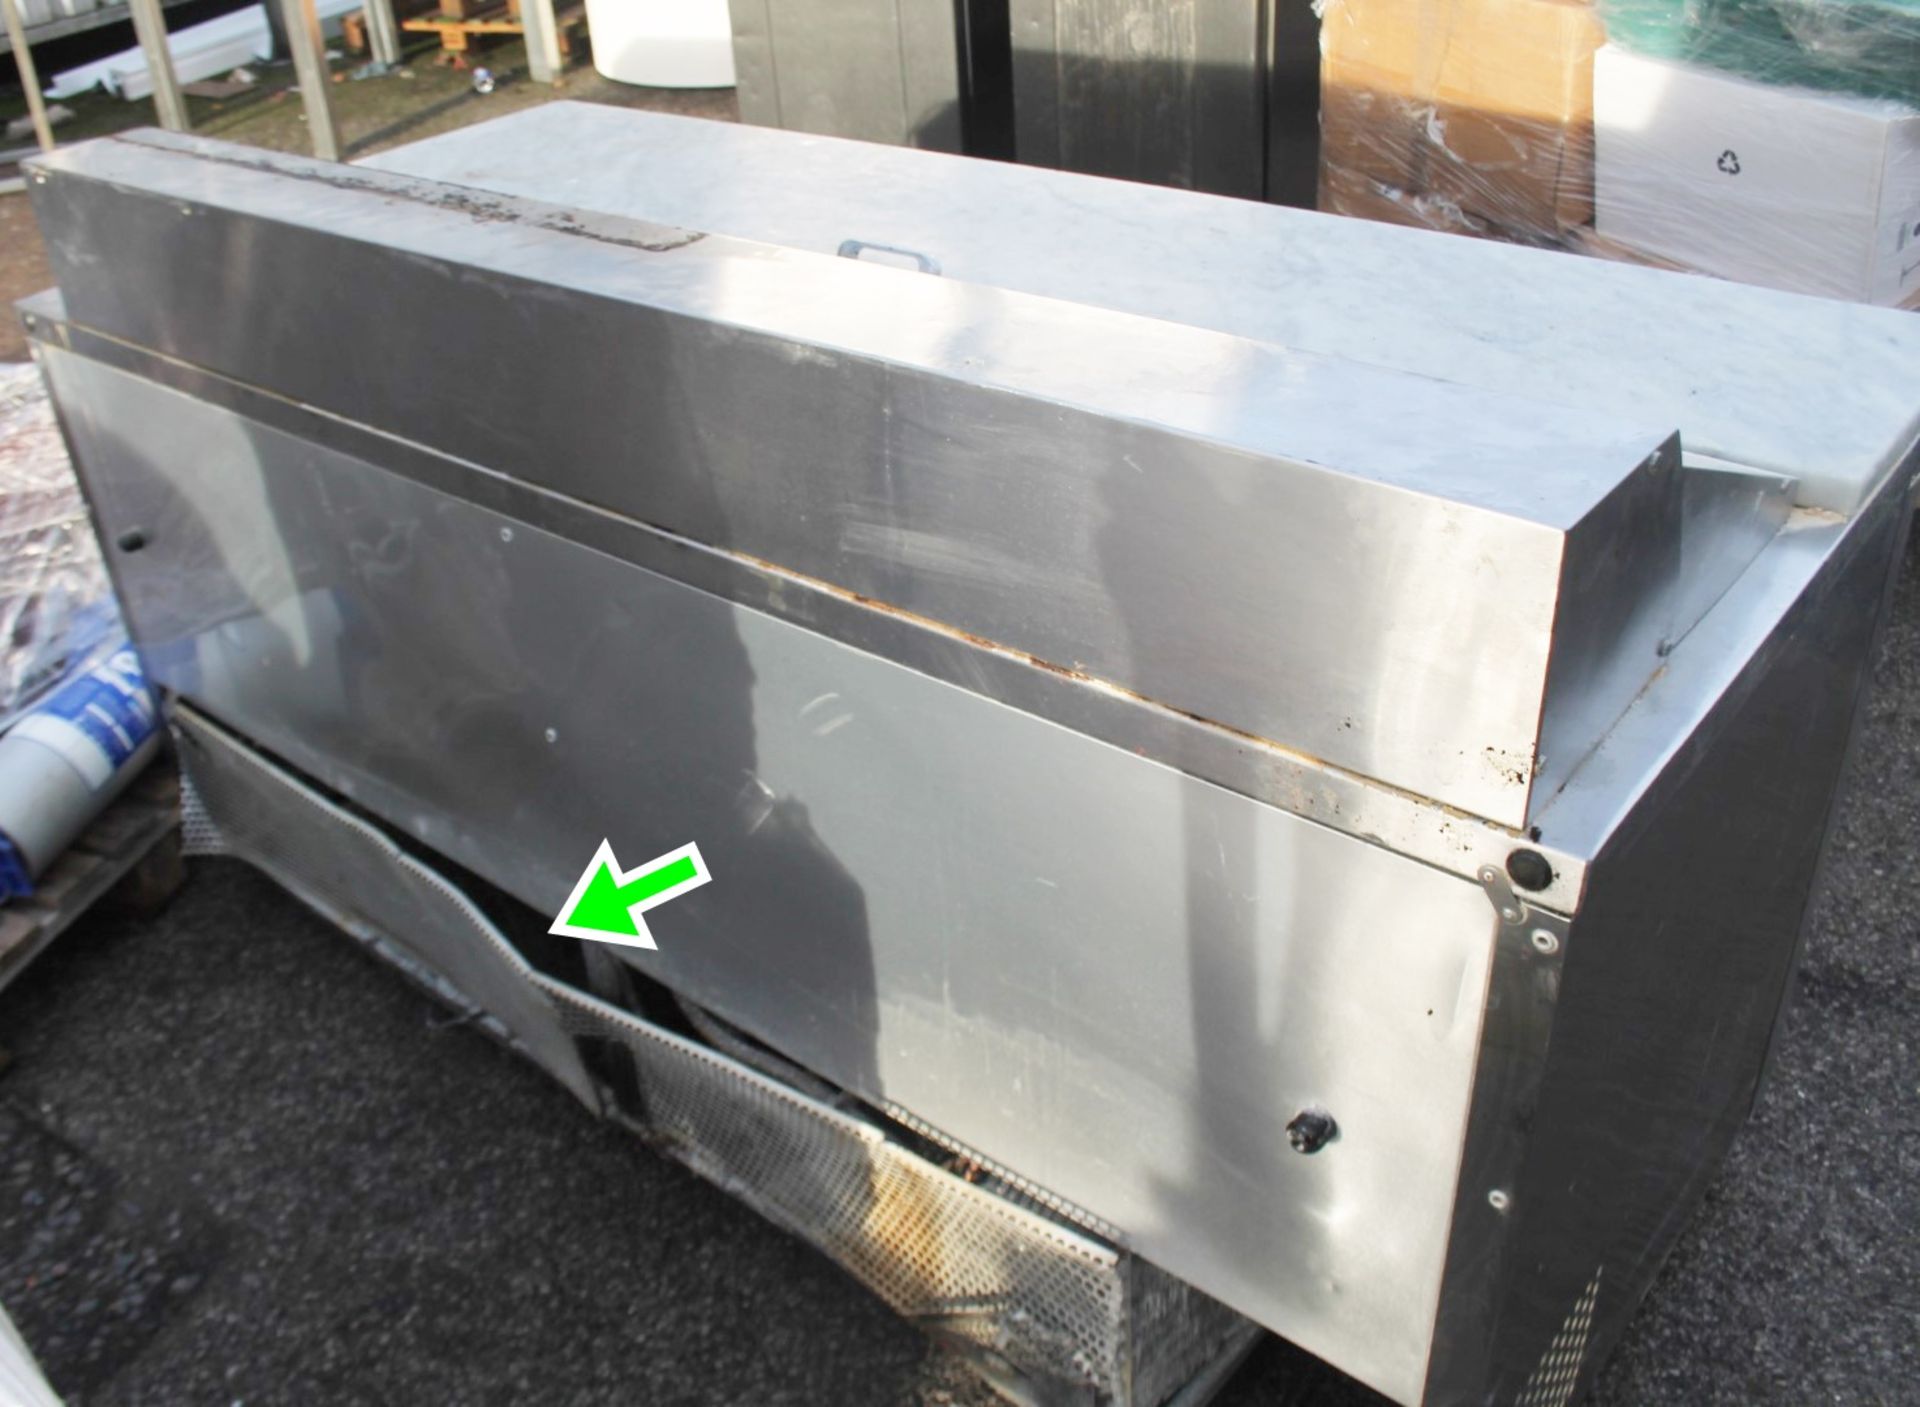 1 x Commercial 3-Door Refrigerated Counter In Stainless Steel - Ref: GEN763 WH2 - CL811 BEL - - Image 2 of 5